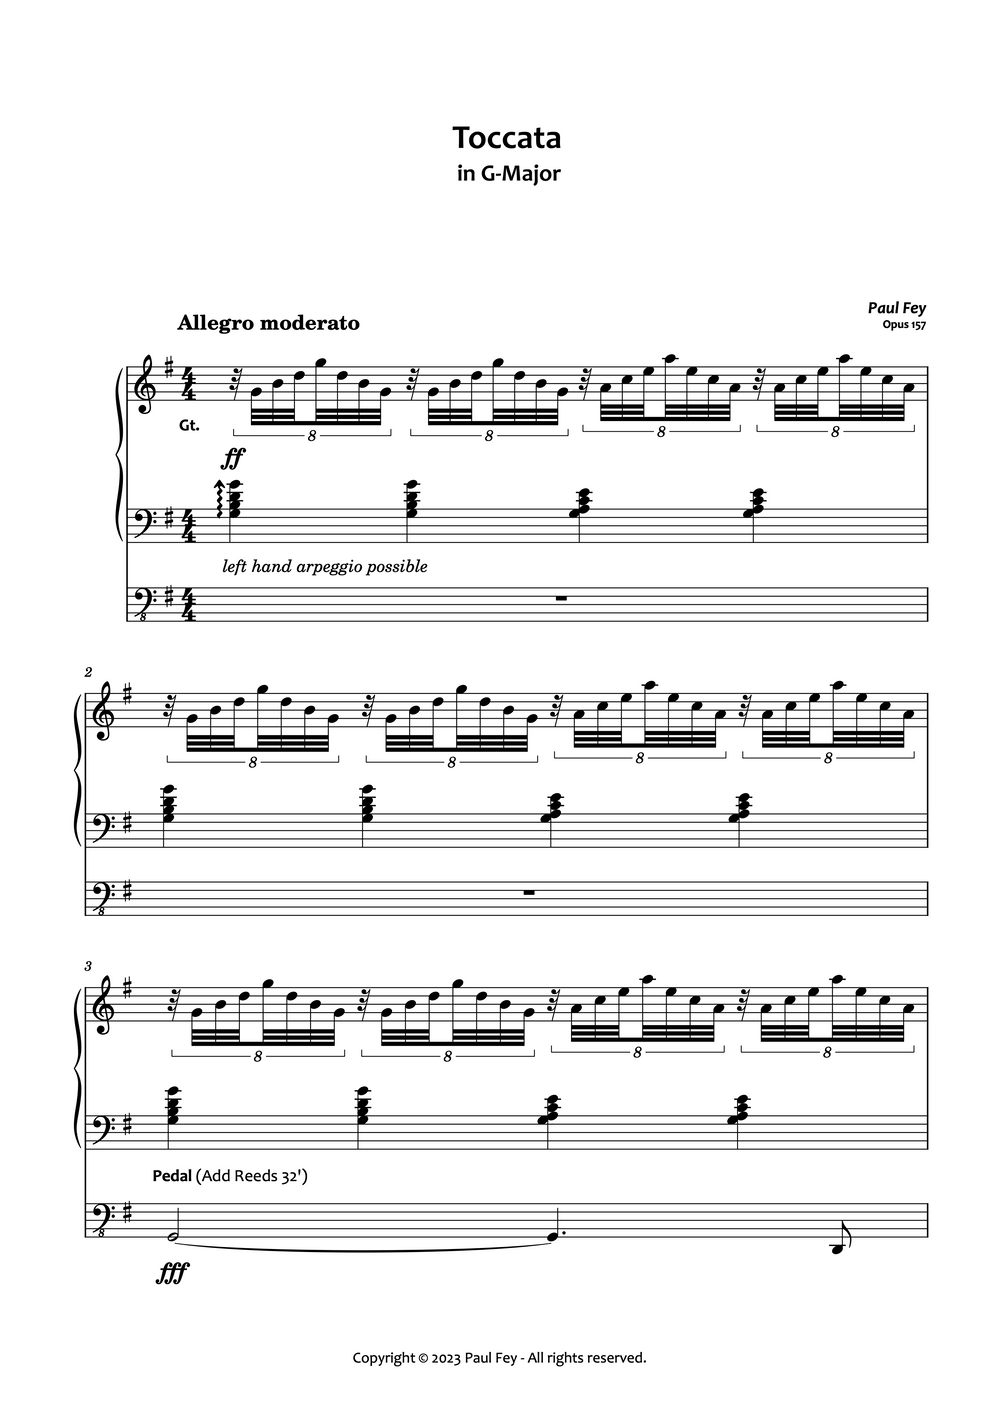 Toccata in C Major Paul fey organist sheet music 